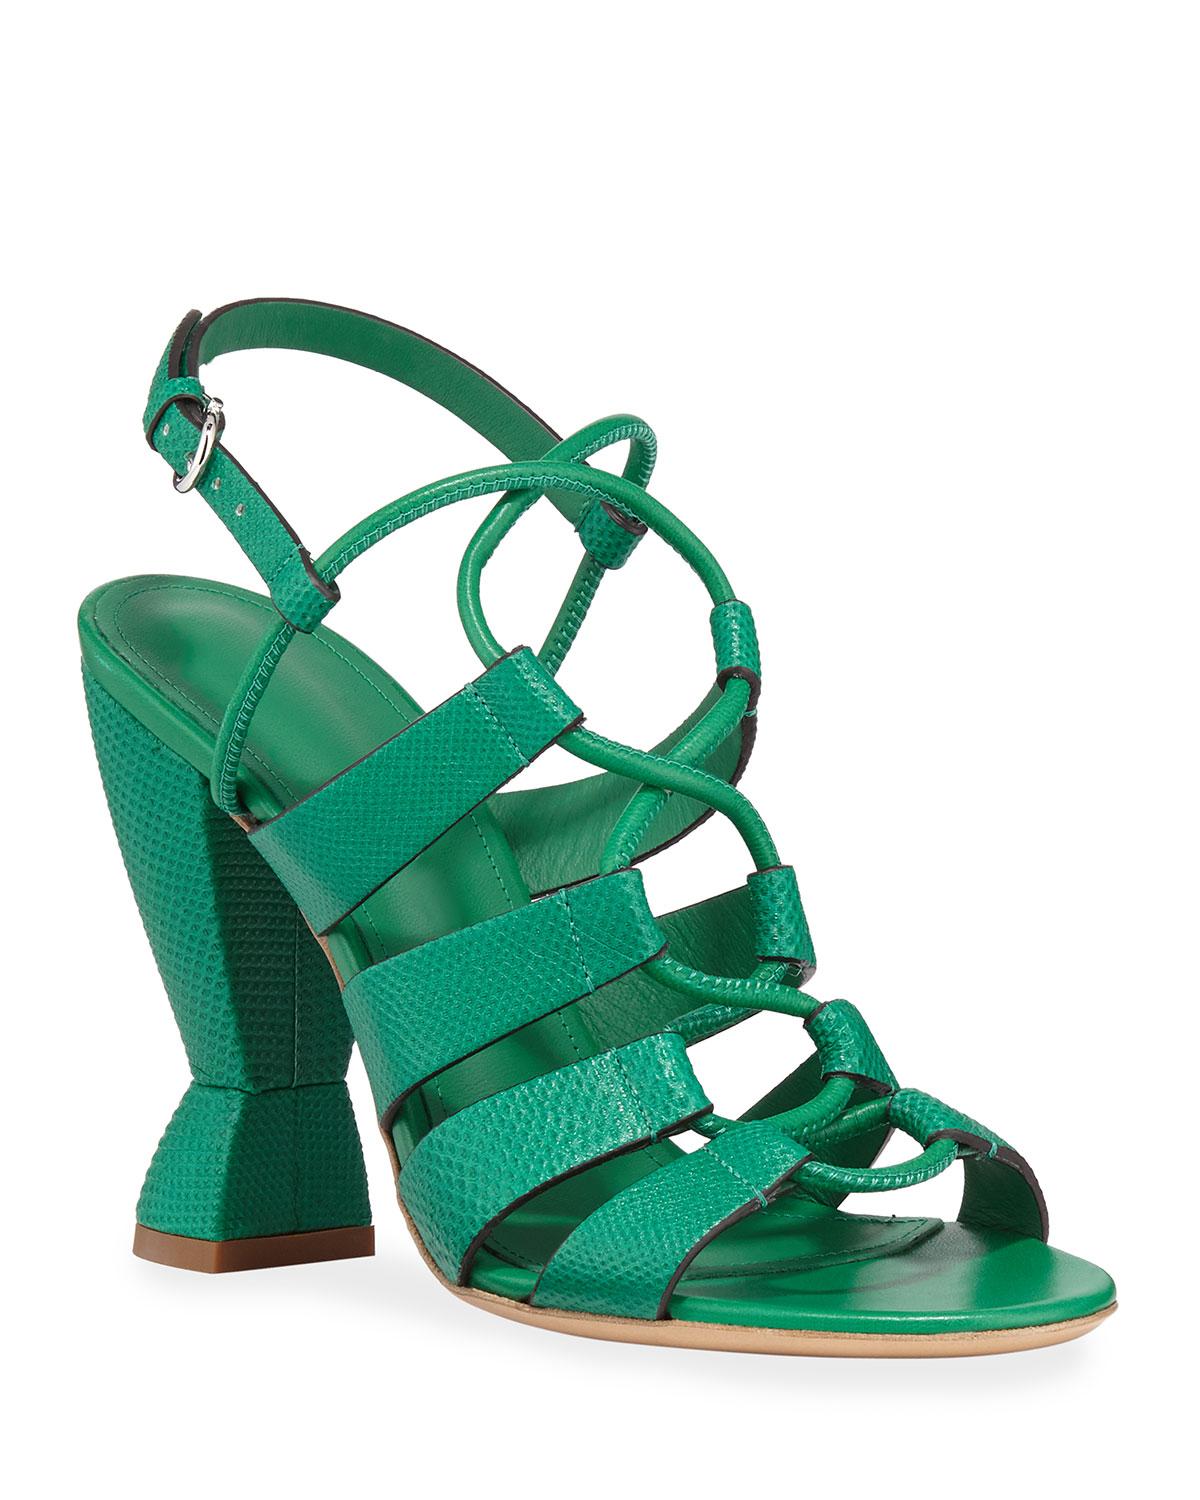 Ferragamo Sculptural Heel Sandals in Emerald Green (Green) - Lyst